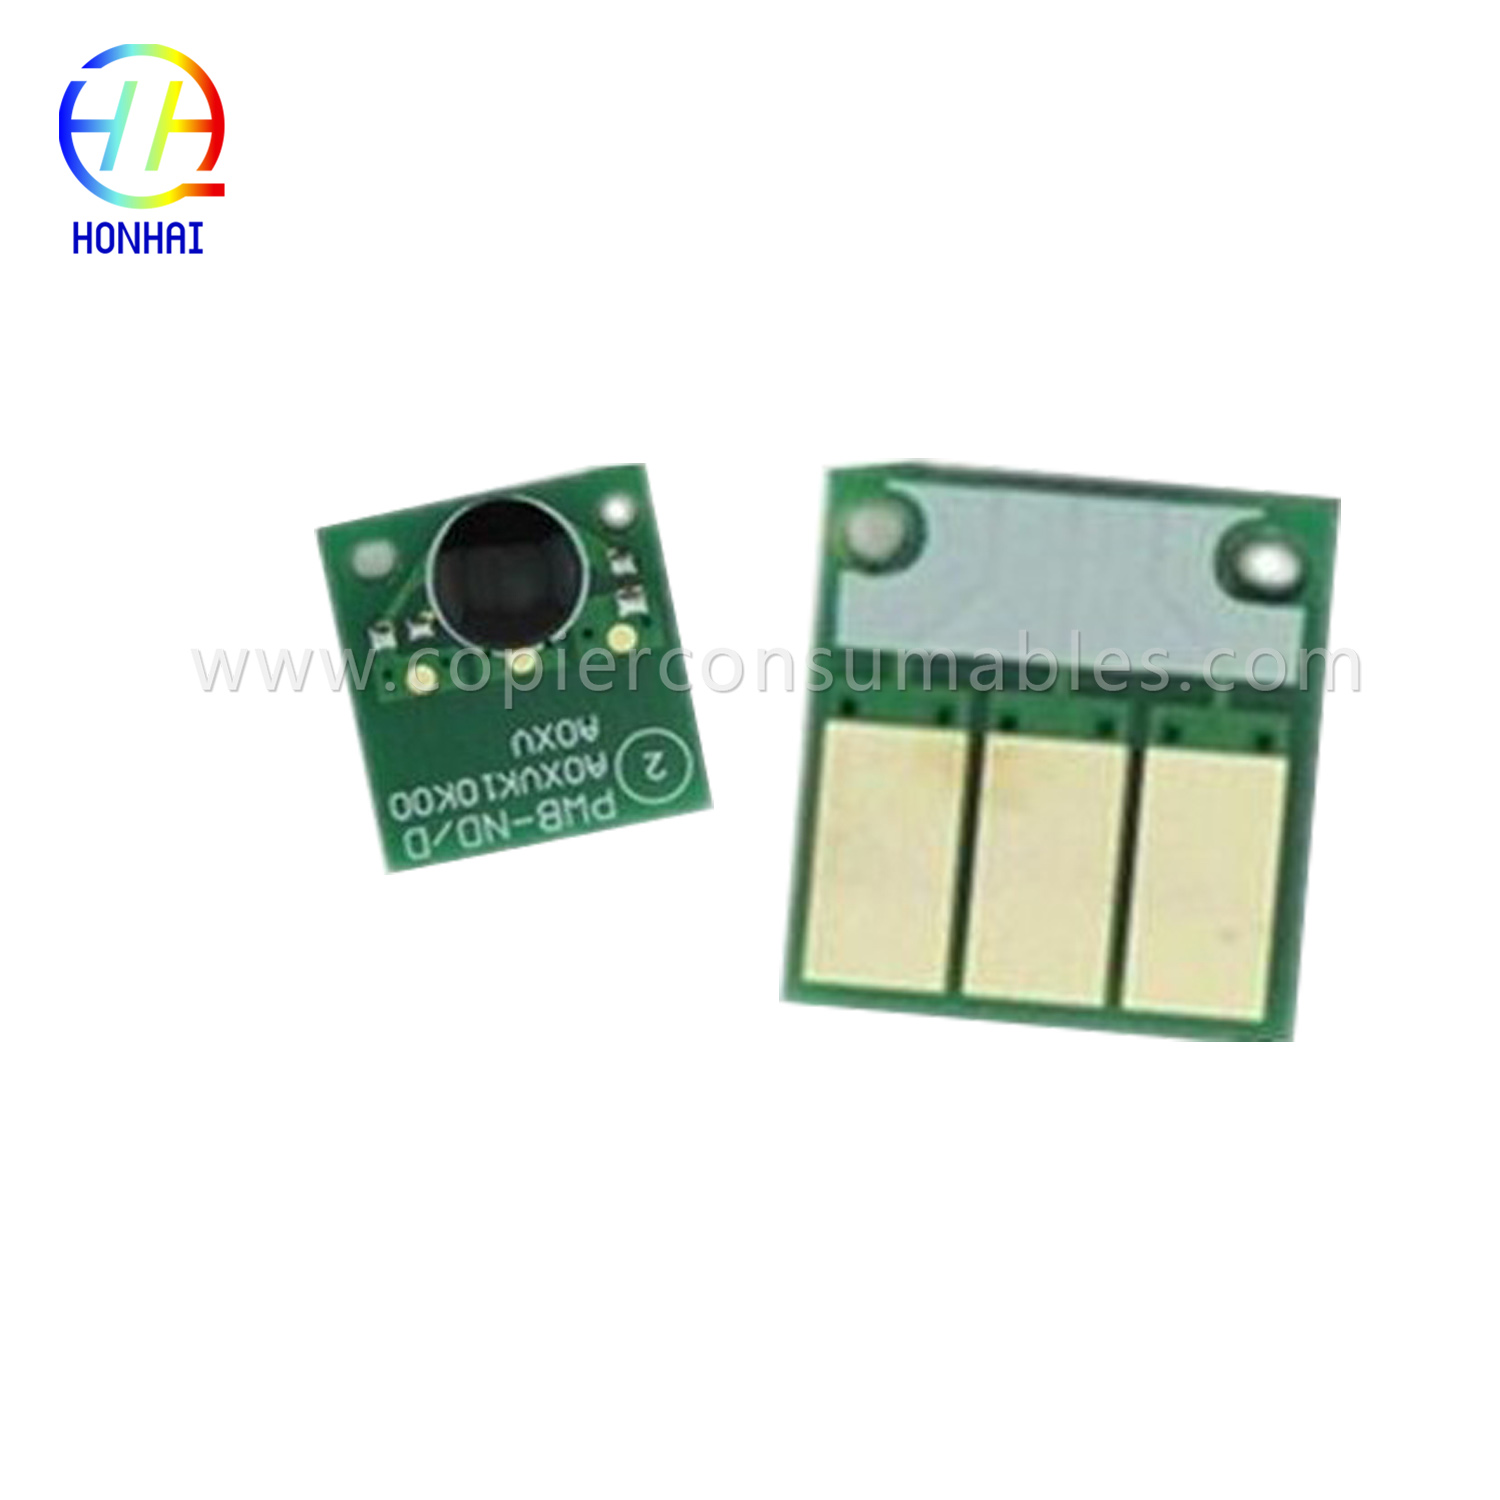 I-Toner cartridge Chip ye-Konica Minolta C220 C280 C360.jpg-1 拷贝